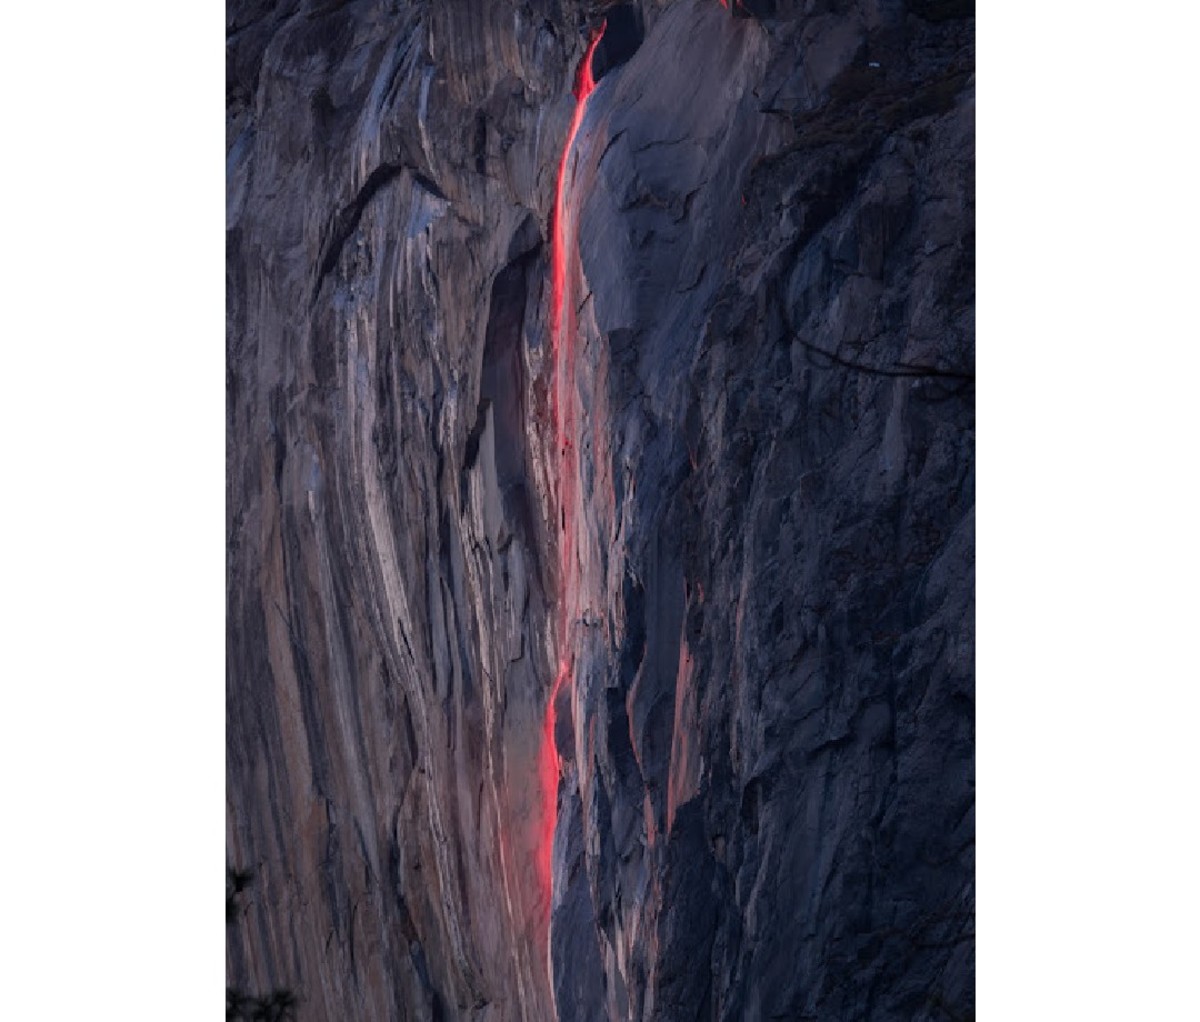 Horsetail Falls glowing red down the sheer dark cliff face of El Capitan in Yosemite National Park